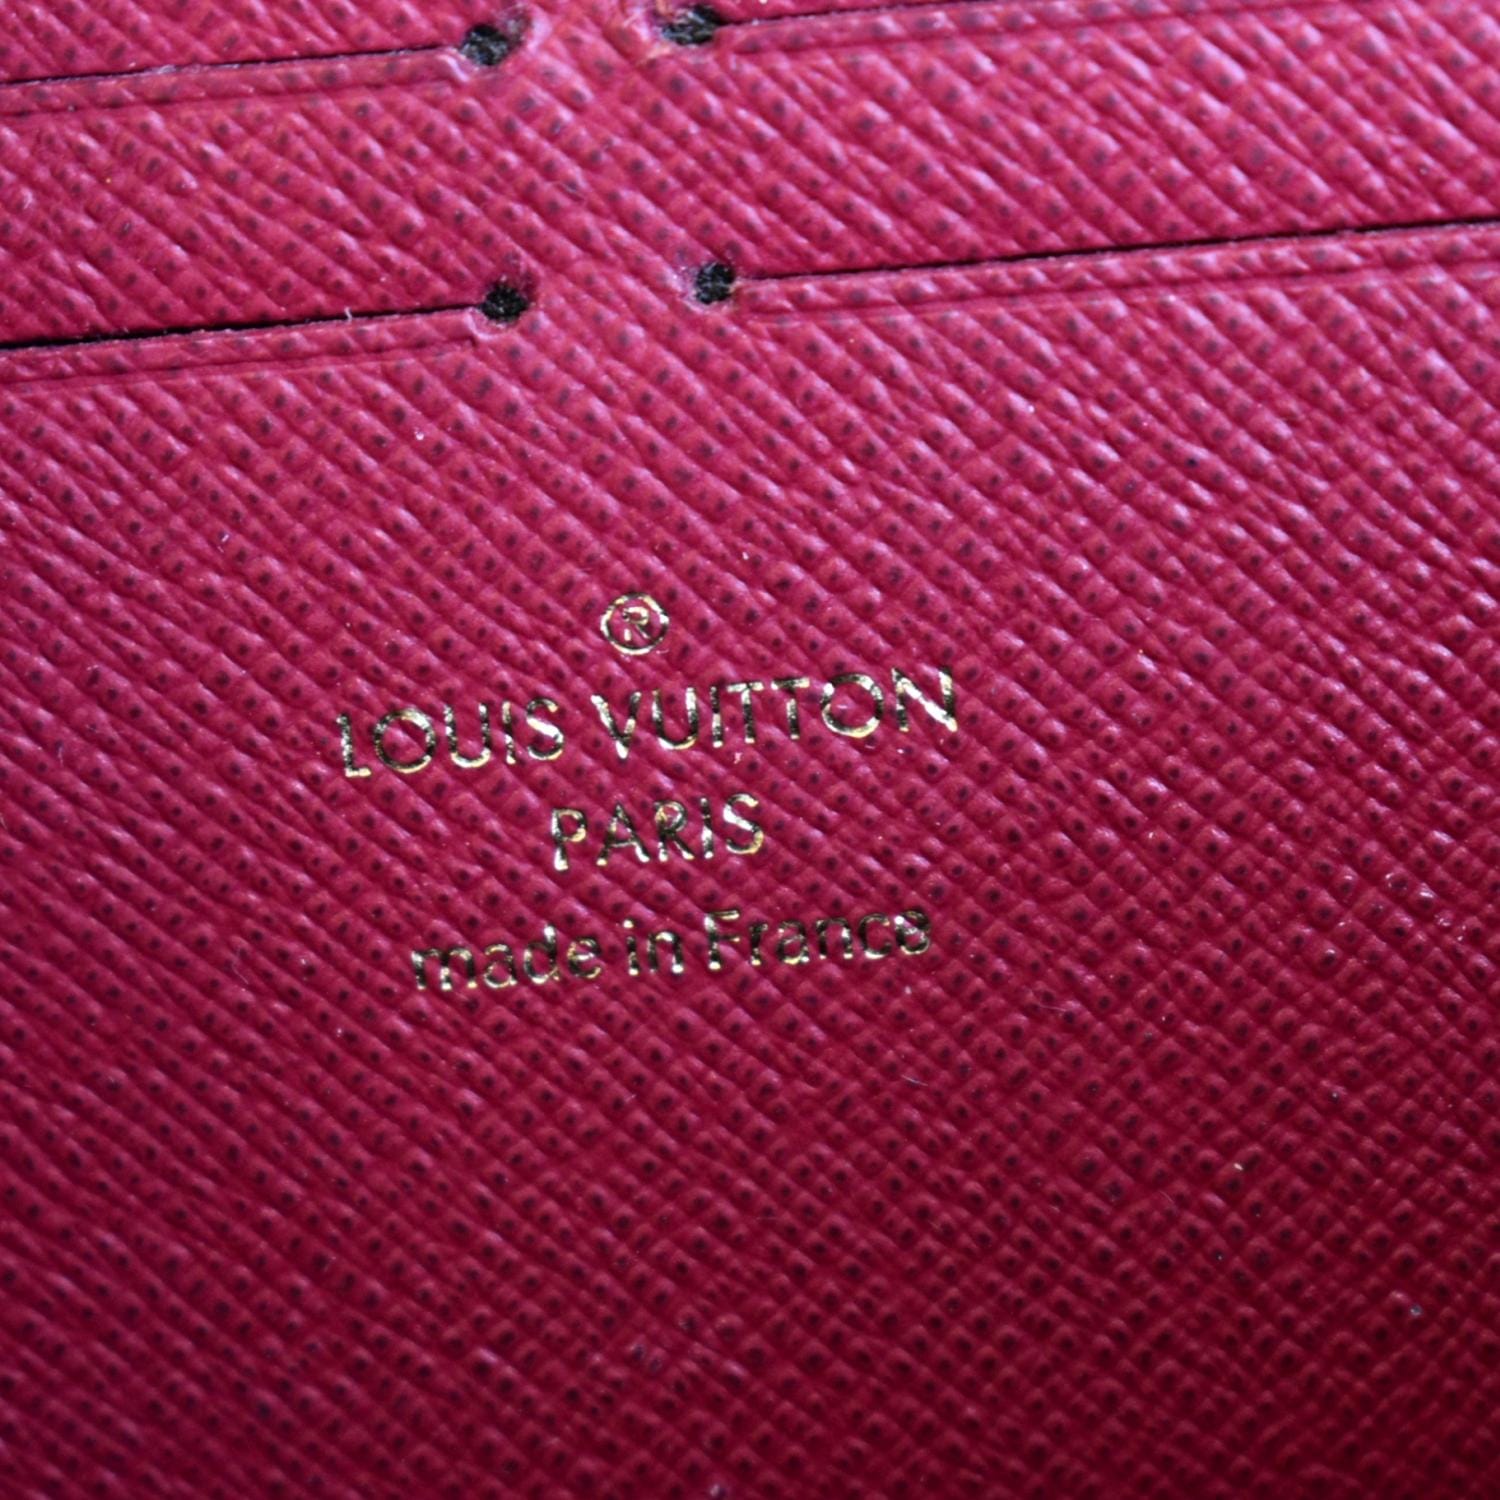 Louis Vuitton Clemence Wallet Monogram Canvas Brown 2347654